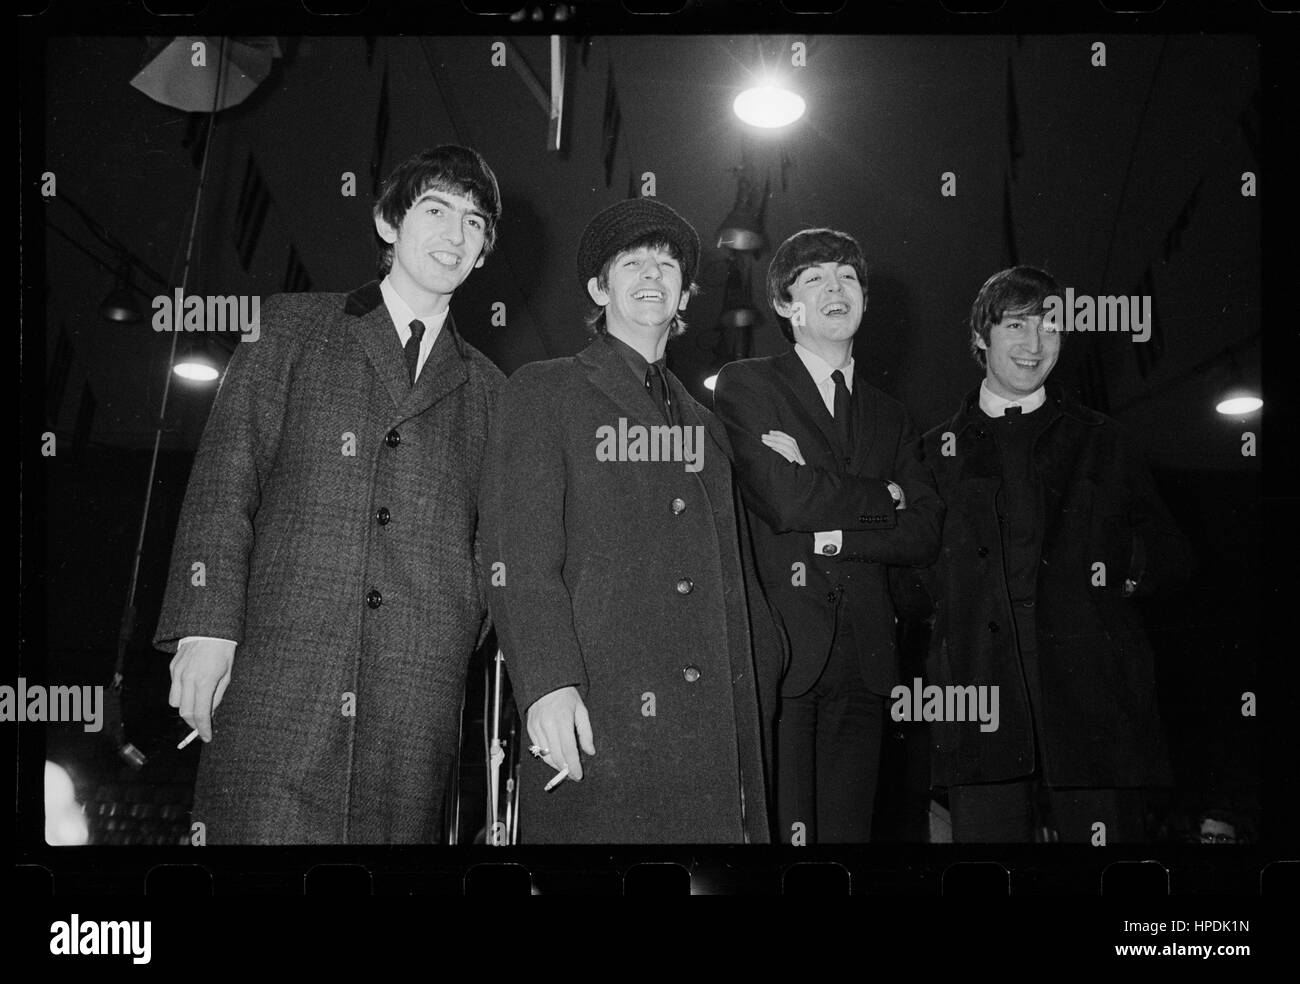 The Beatles arriving at Washington Coliseum and press conference, Washington, DC, 02/11/1964. Photo by Marion S Trikosko Stock Photo